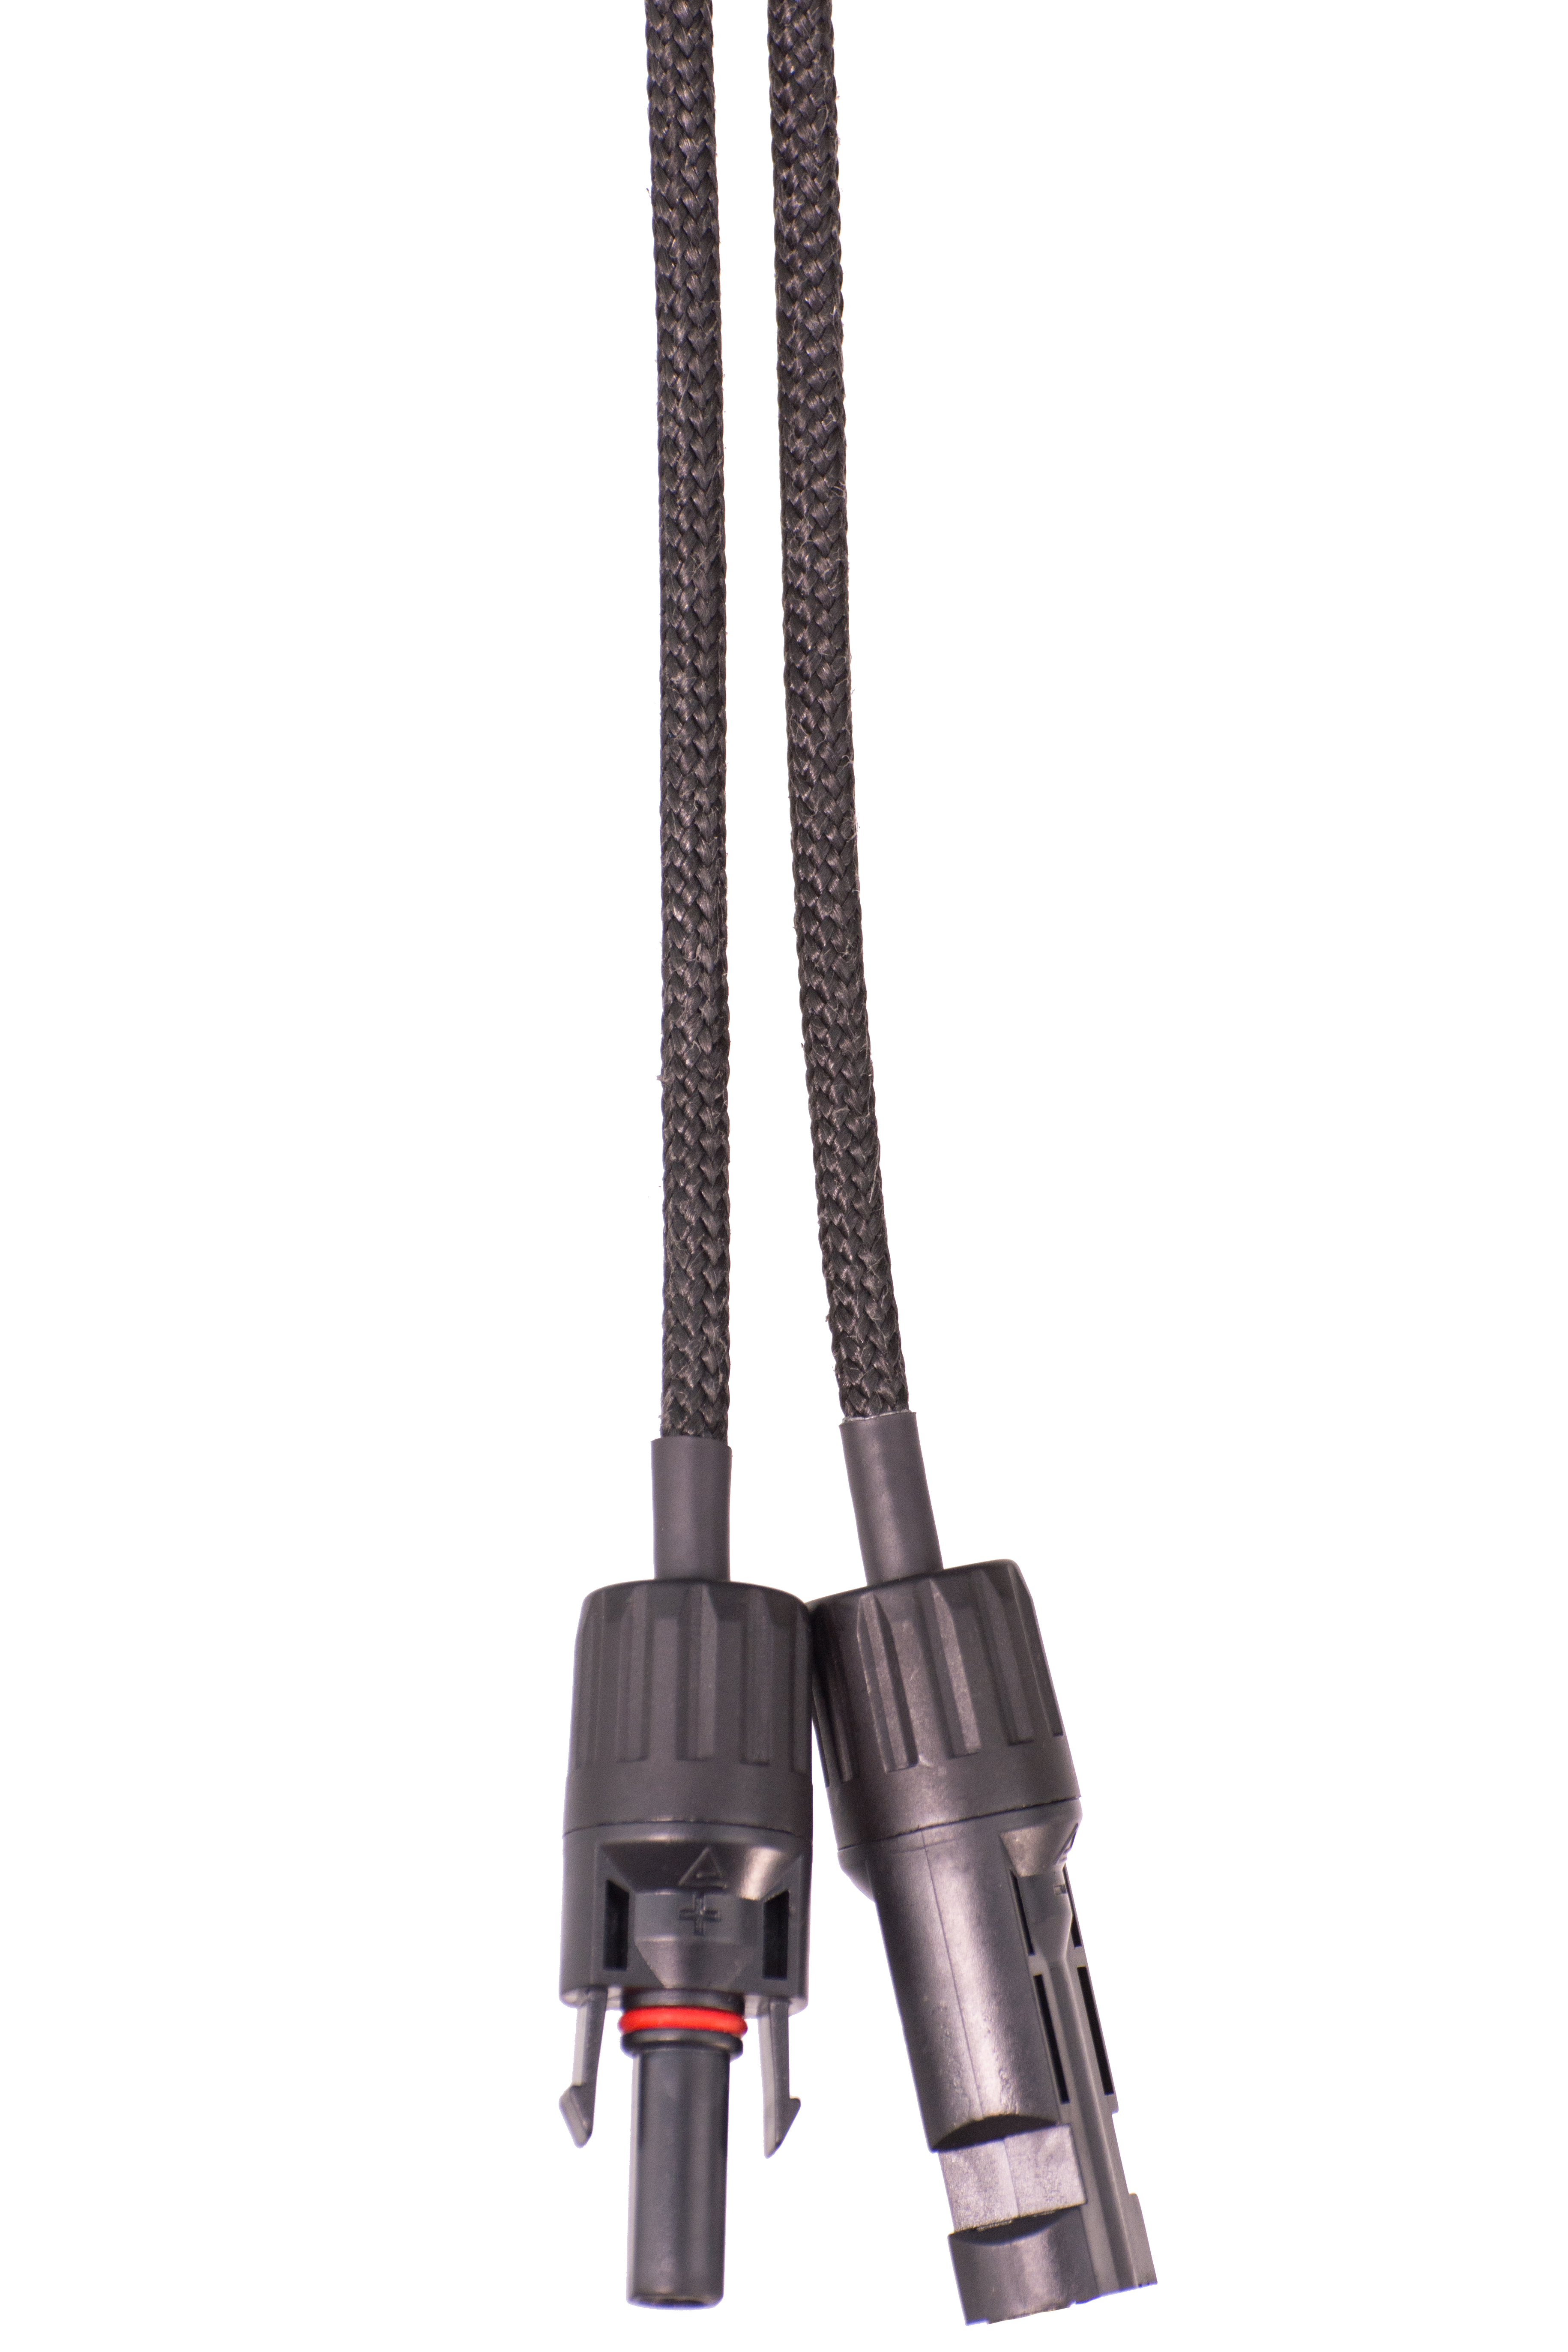 FLIN-SOLAR FLINflex - standard - 100W - soft cable